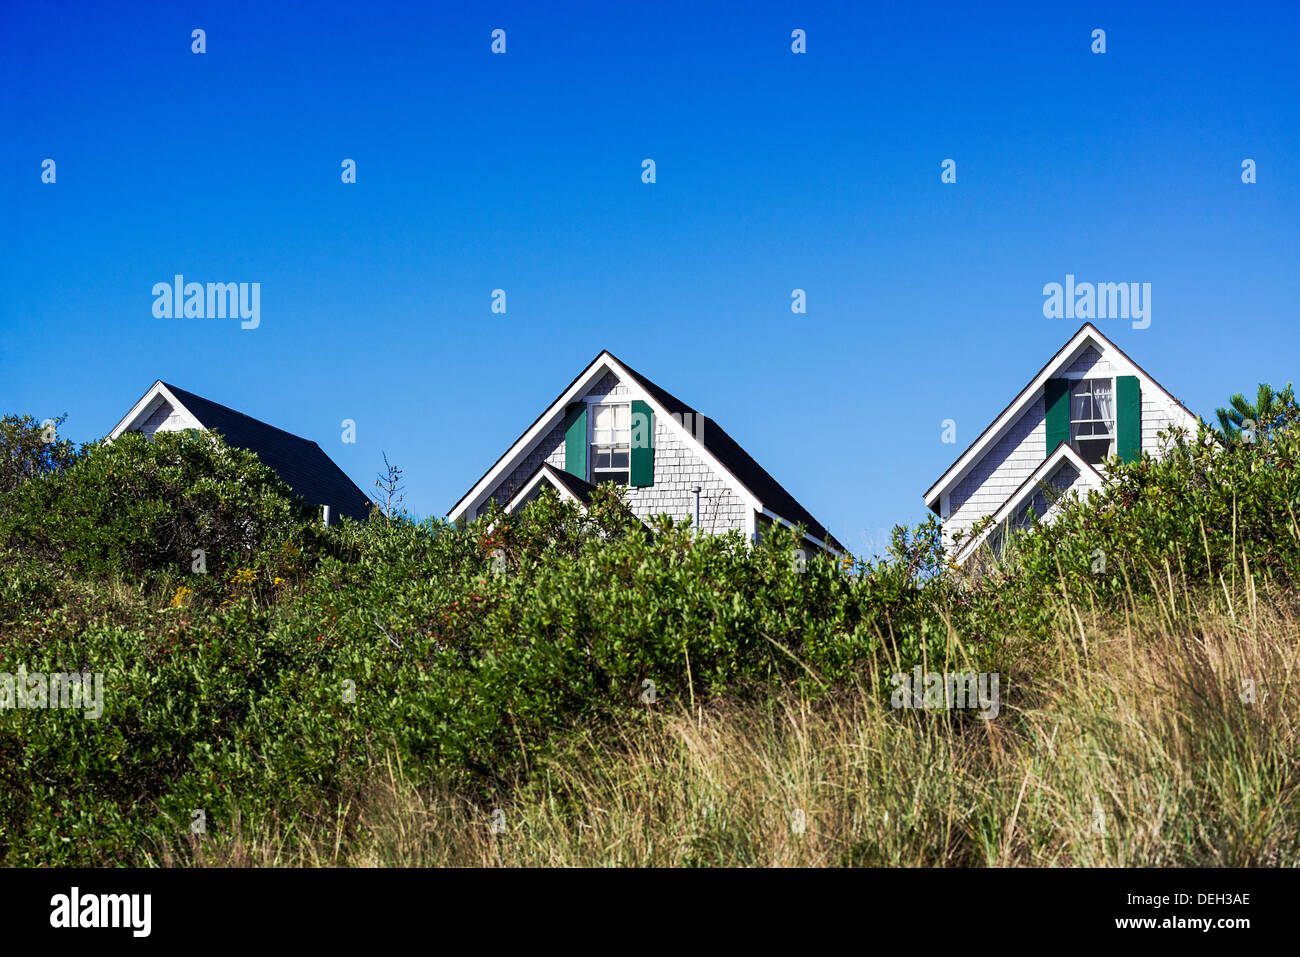 Waterfront rental cottages, Truro, Cape Cod, Massachusetts, USA Stock Photo